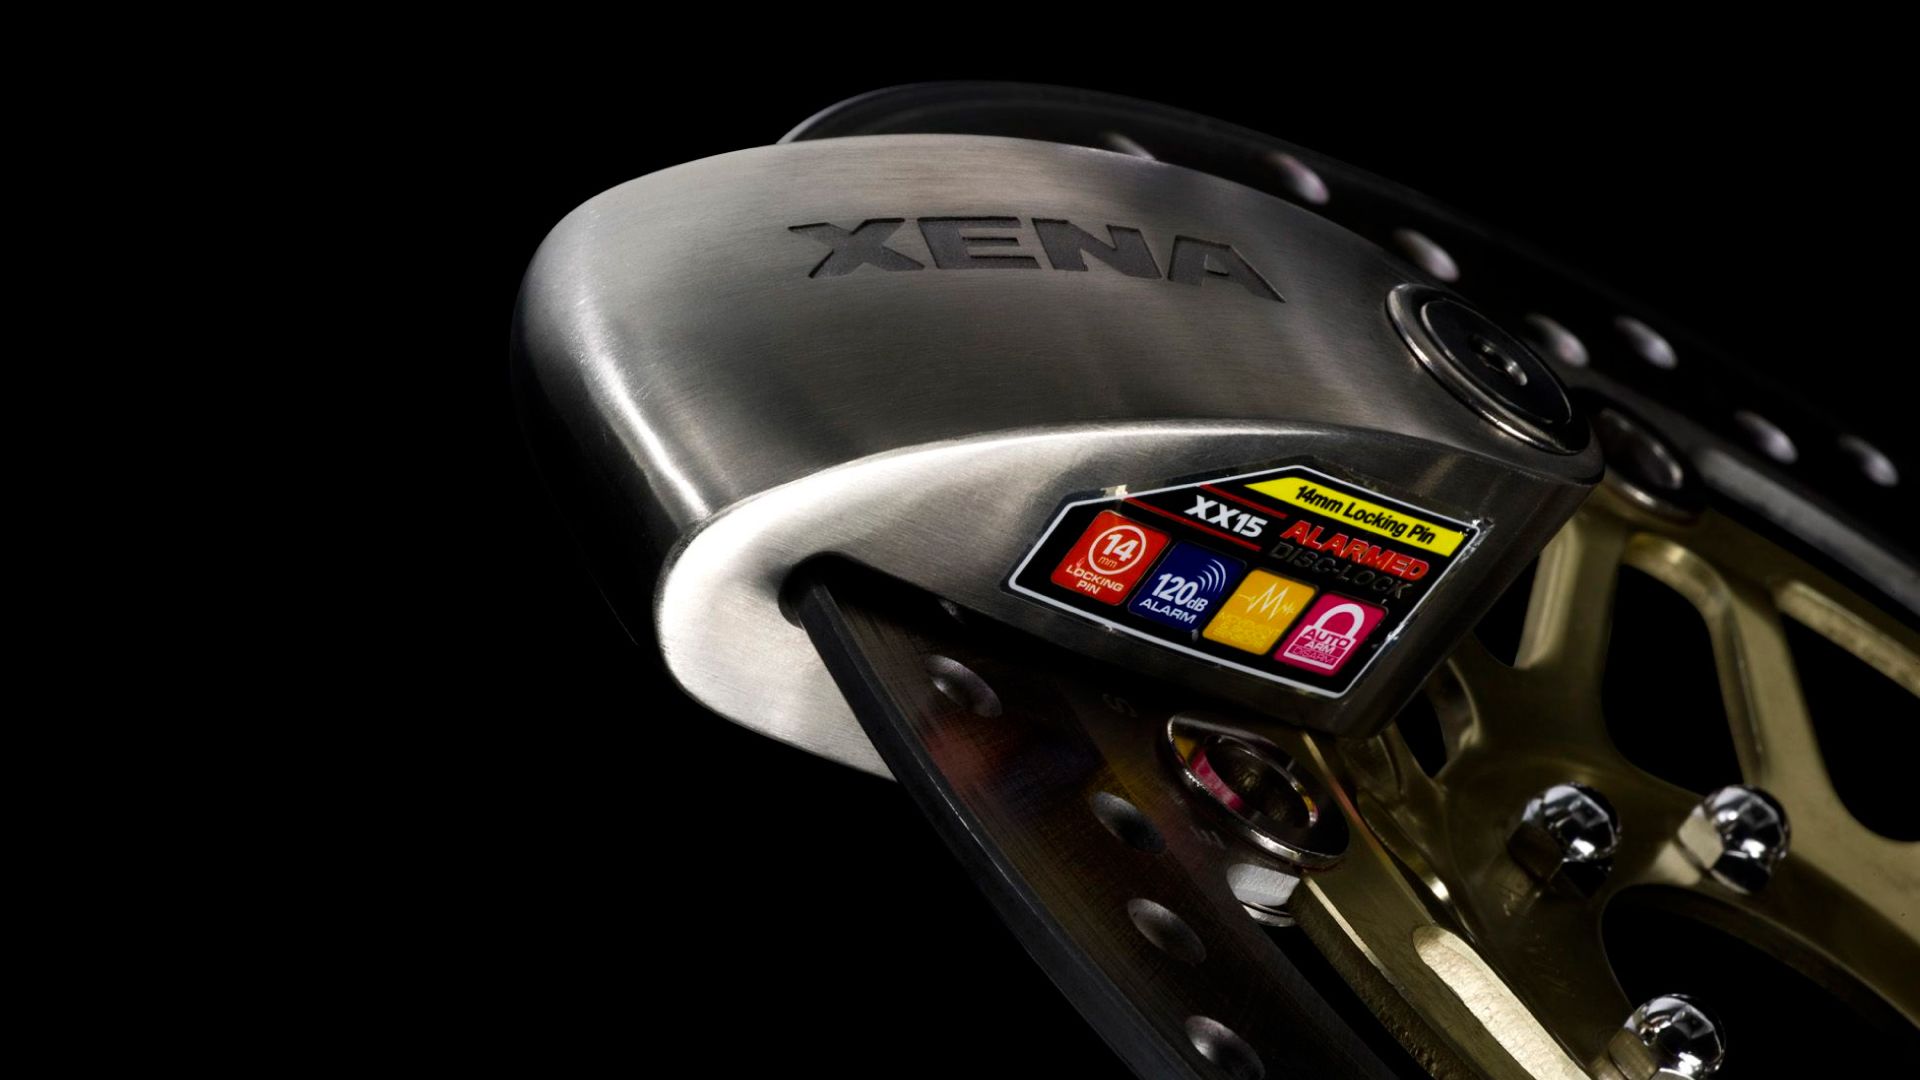 Xena-XX-6-Disc-Lock-with-Alarm